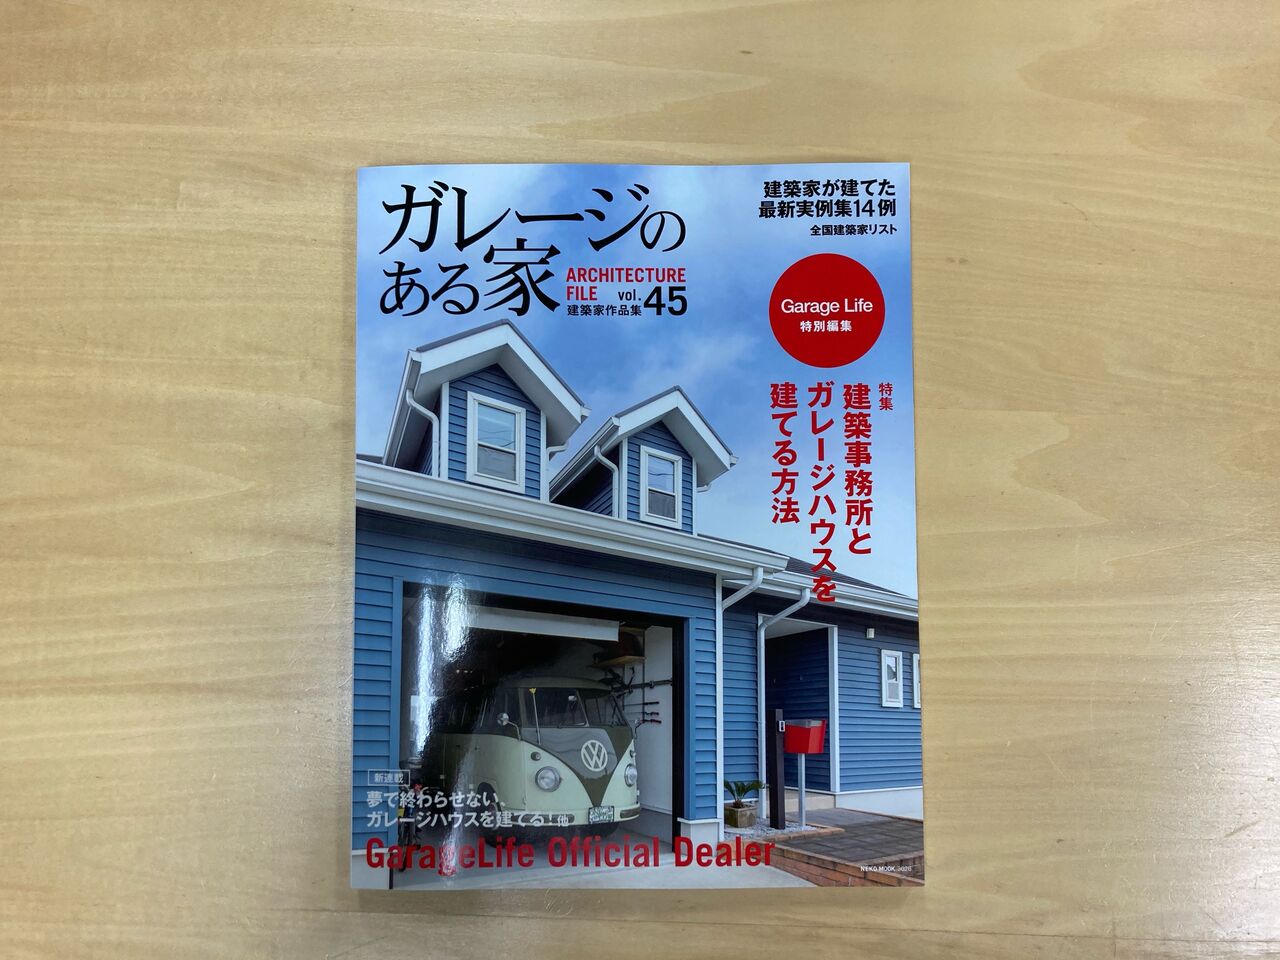 Engawa Garage House が ガレージのある家vol45 に掲載されました 青木設計事務所の建築ブログ